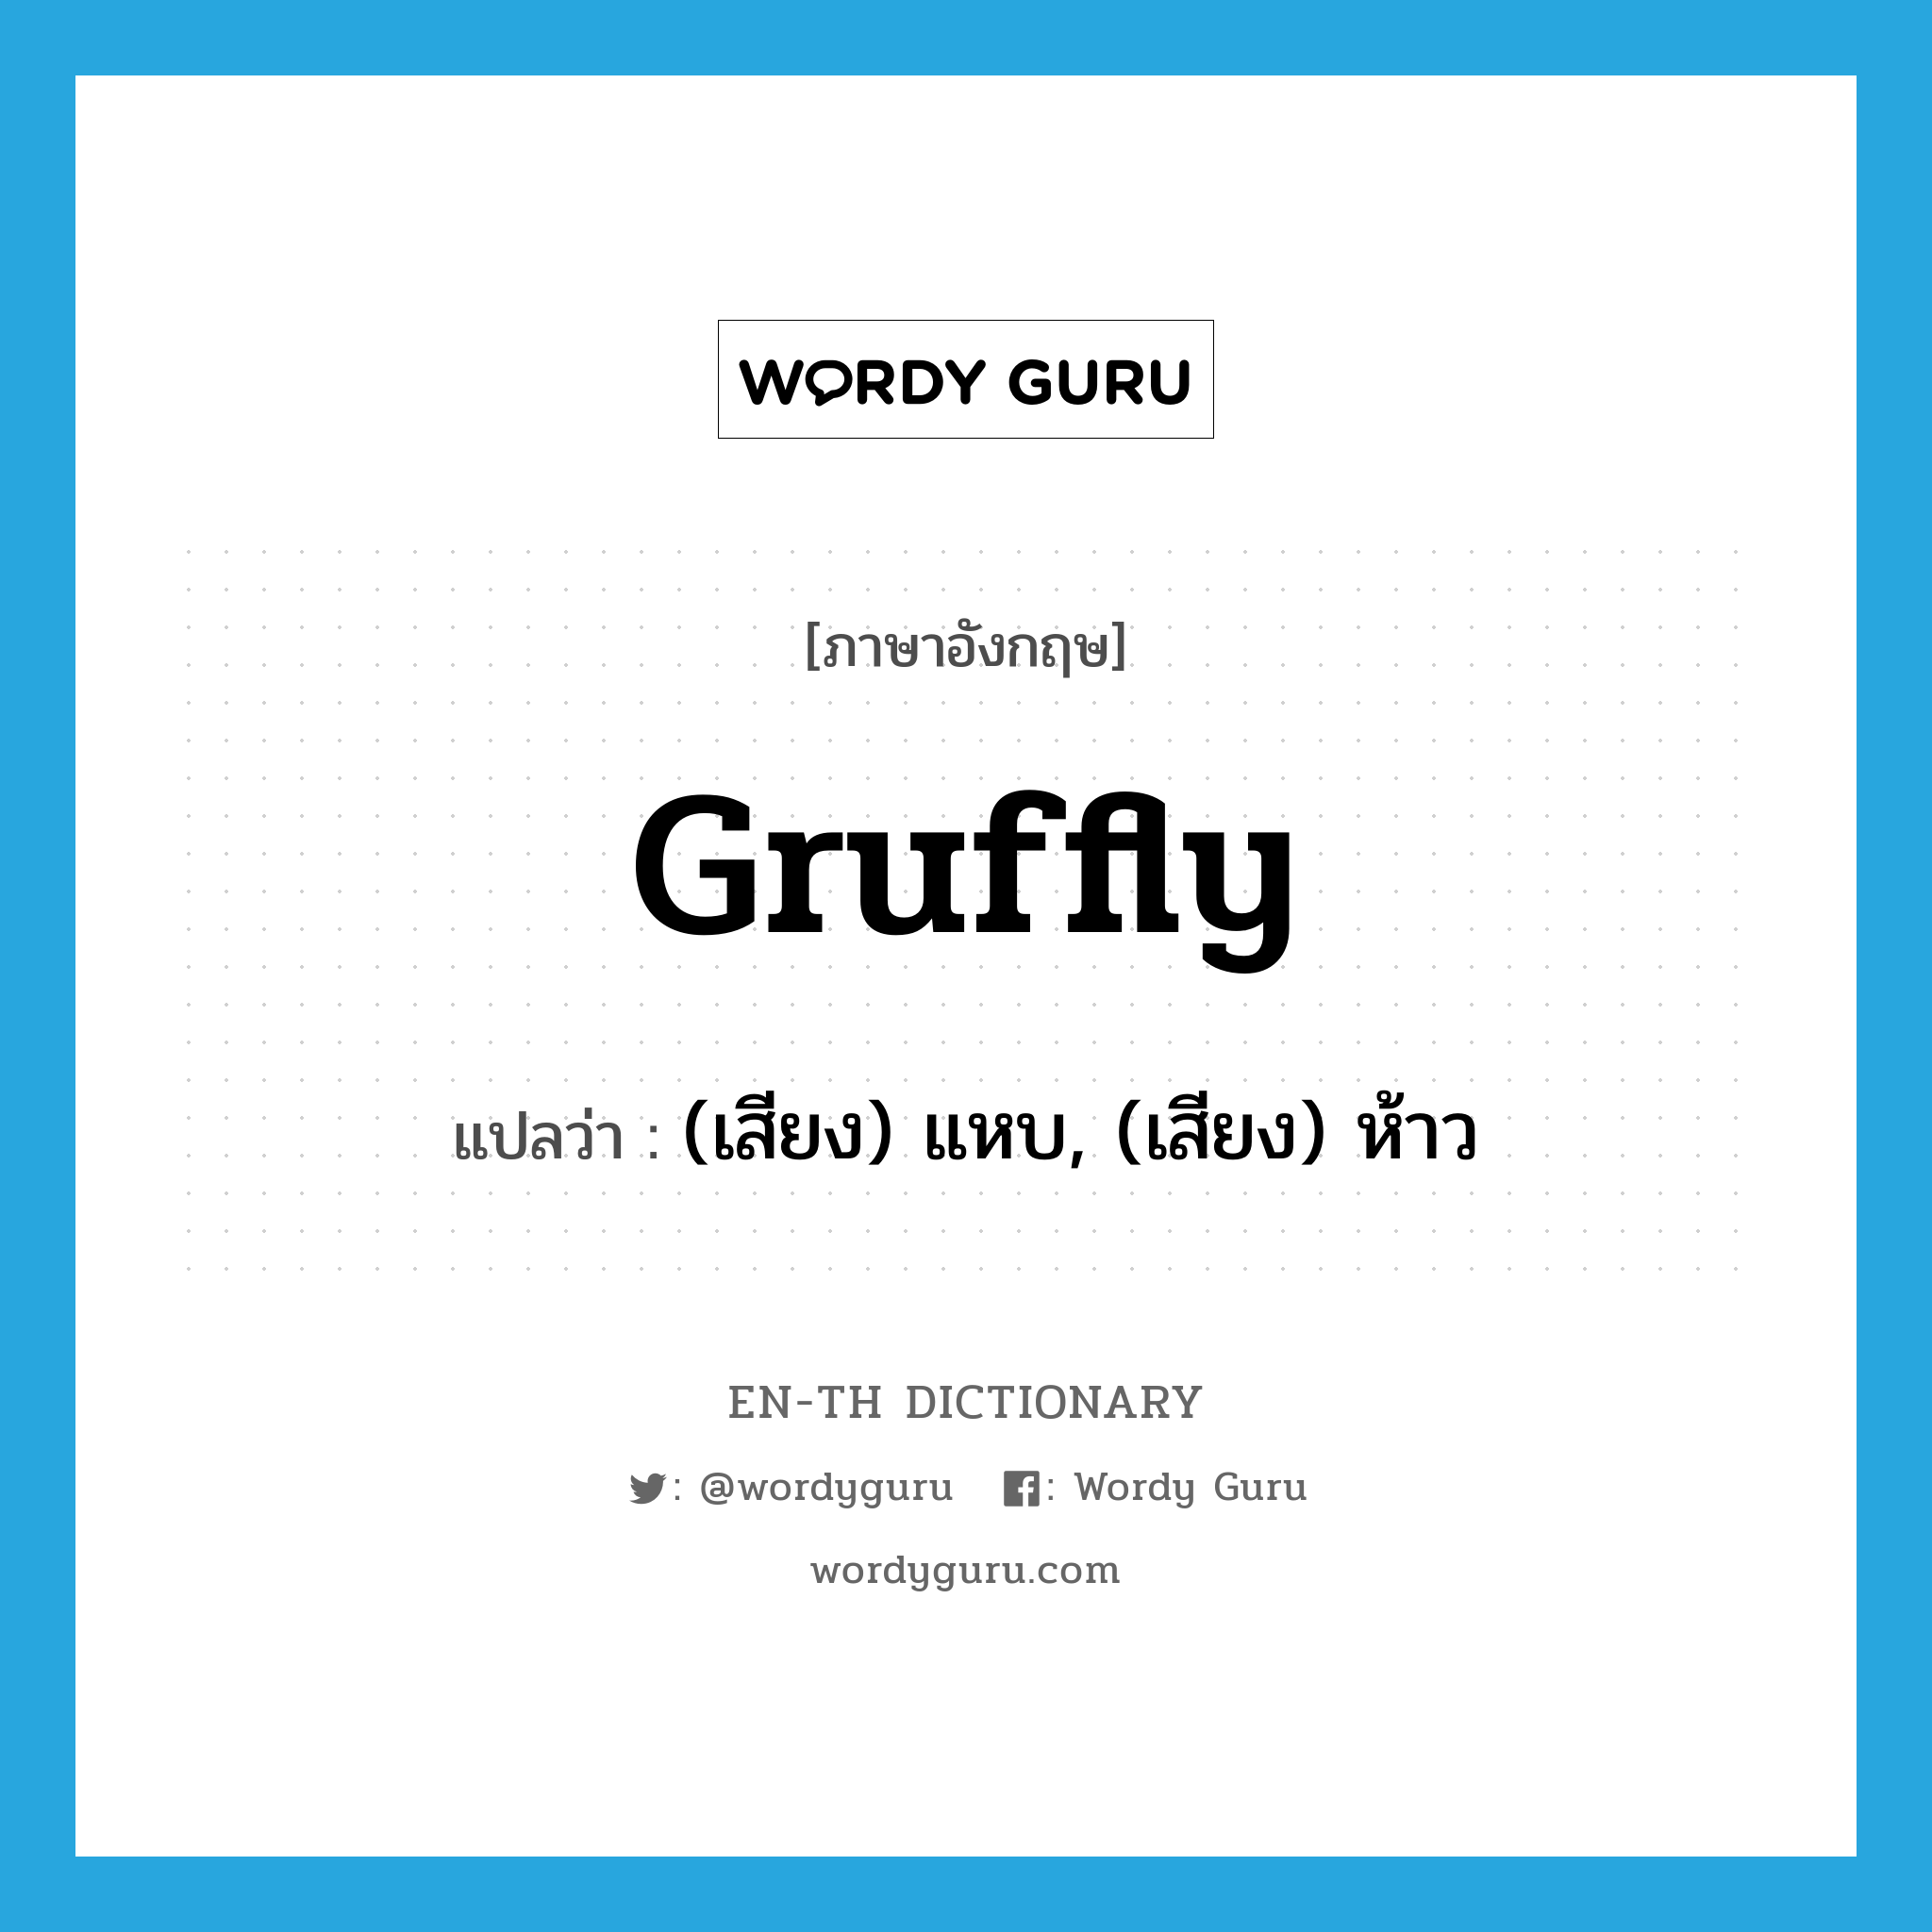 gruffly